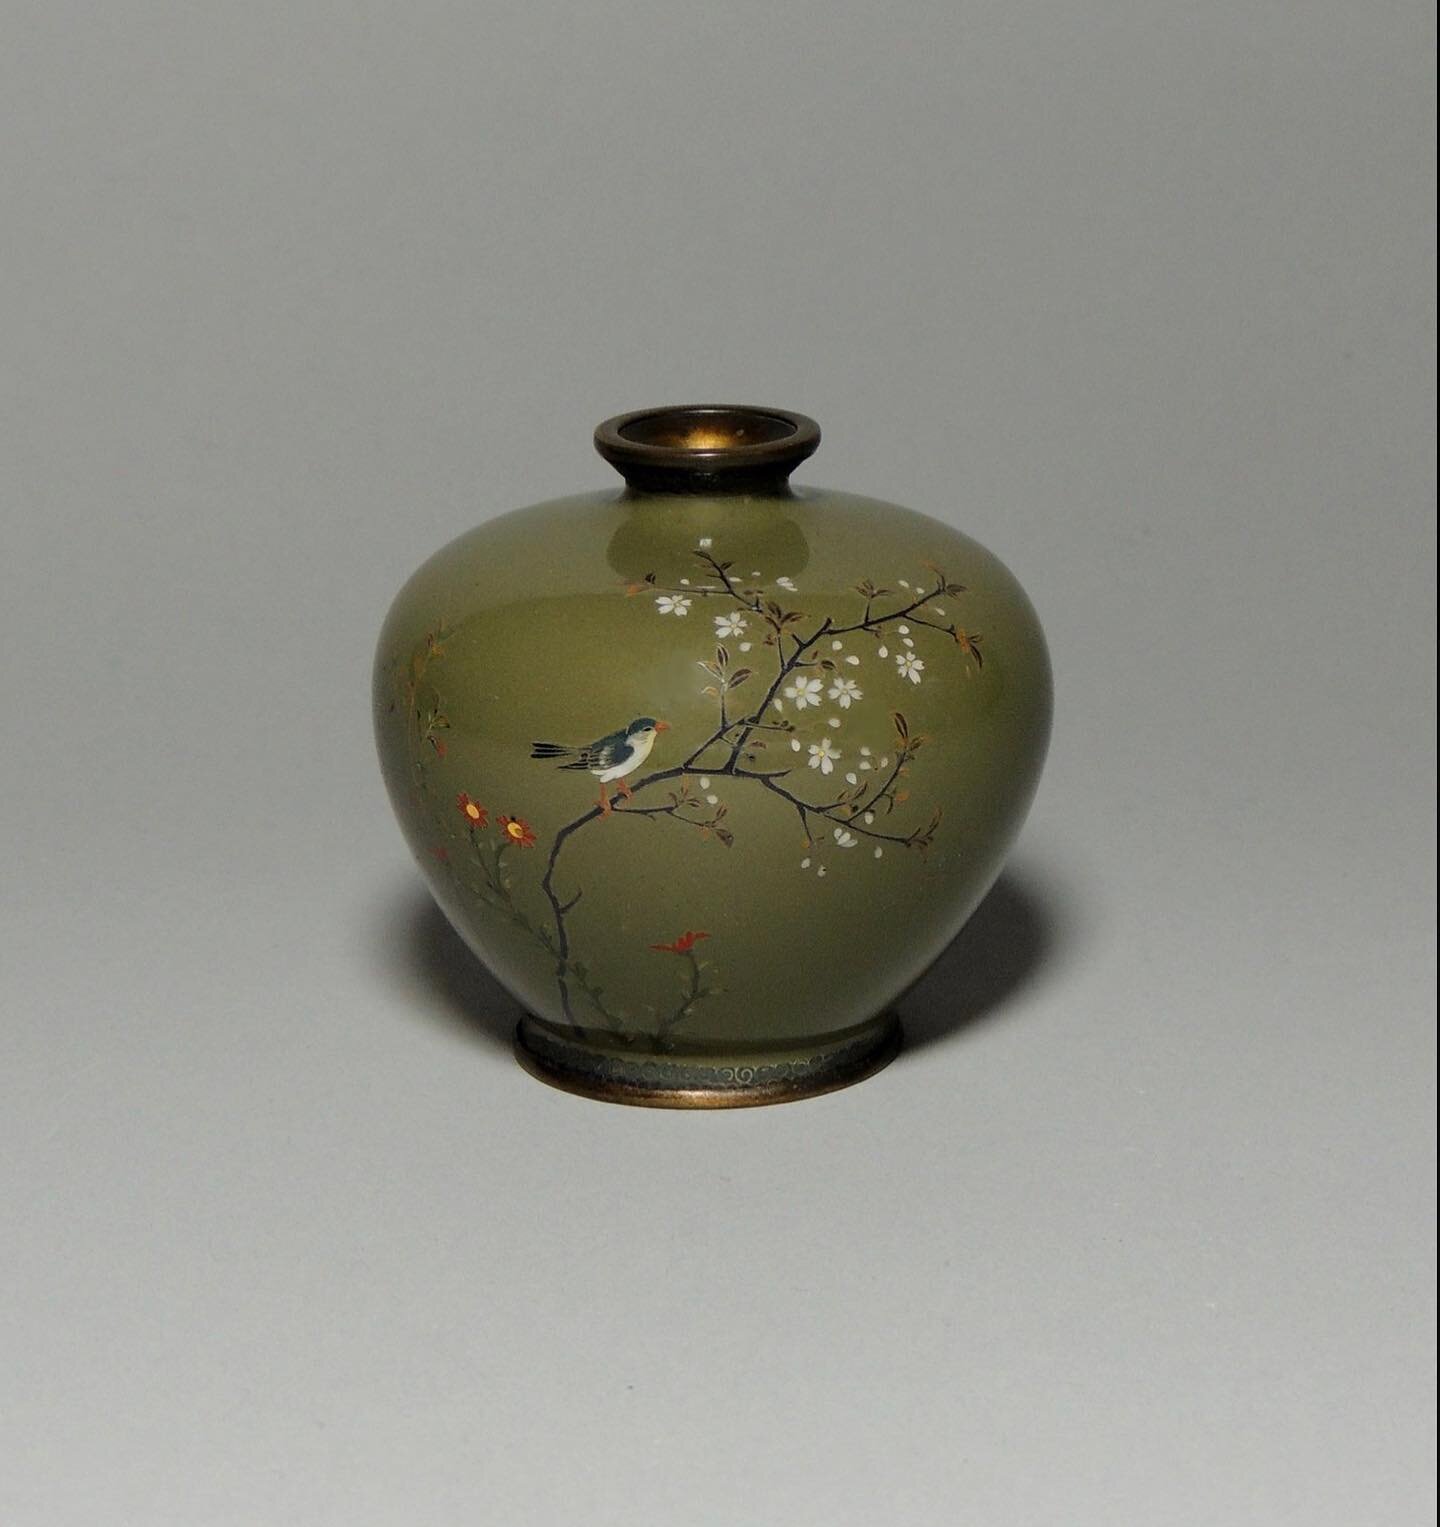 Cloisonn&eacute; vase signed ITO.  #japan #japanese #japaneseart #japaneseartist #japaneseantique #cloisonne #enamel #art #artist #artistsoninstagram #antique #antiques #museum #museumart #birds #blossom